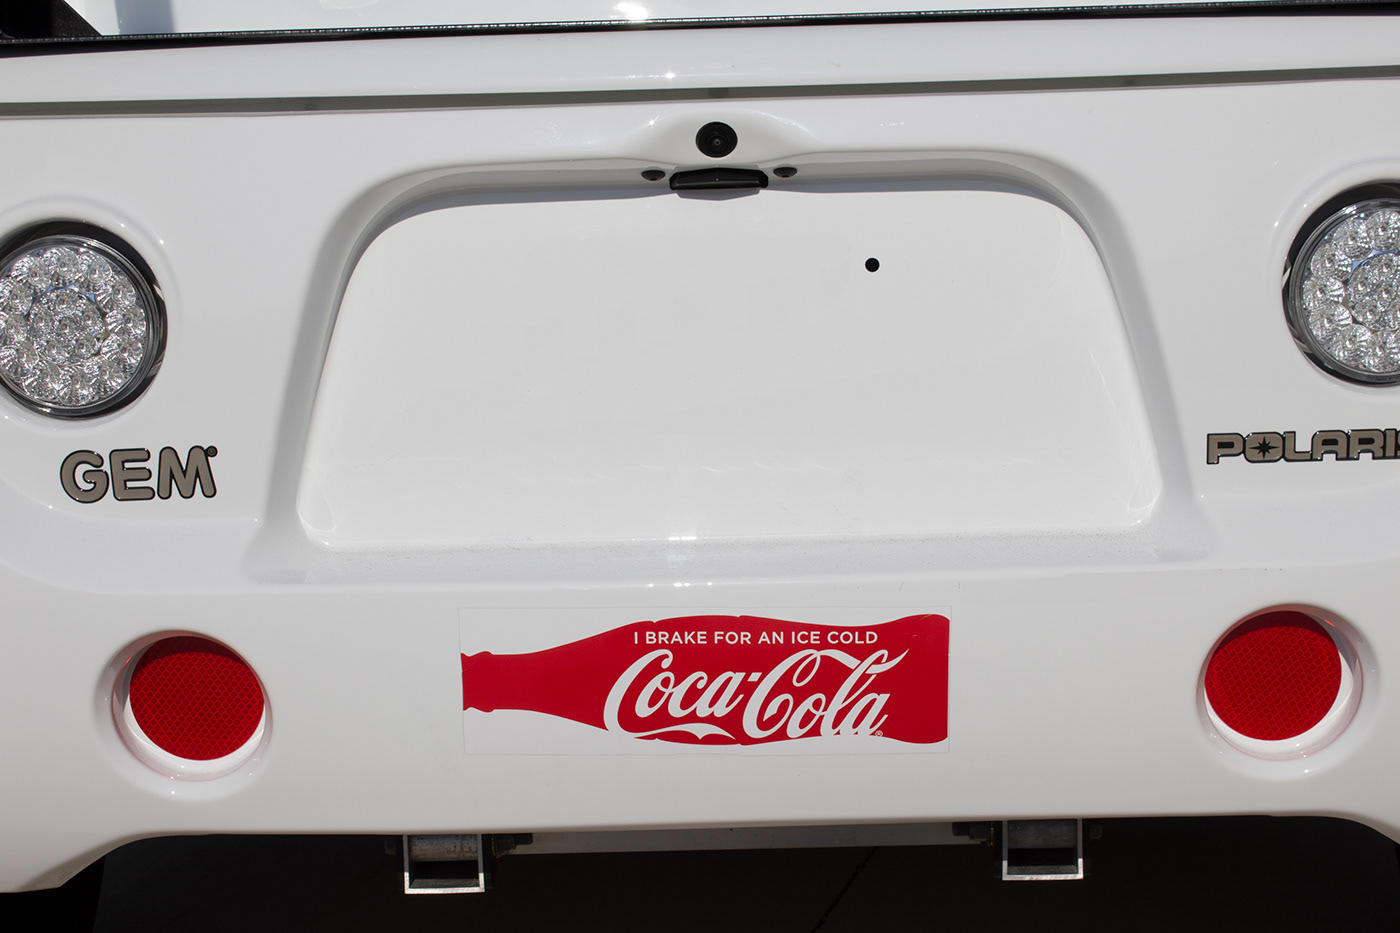 Coca-Cola chattanooga Vehicle Wrap